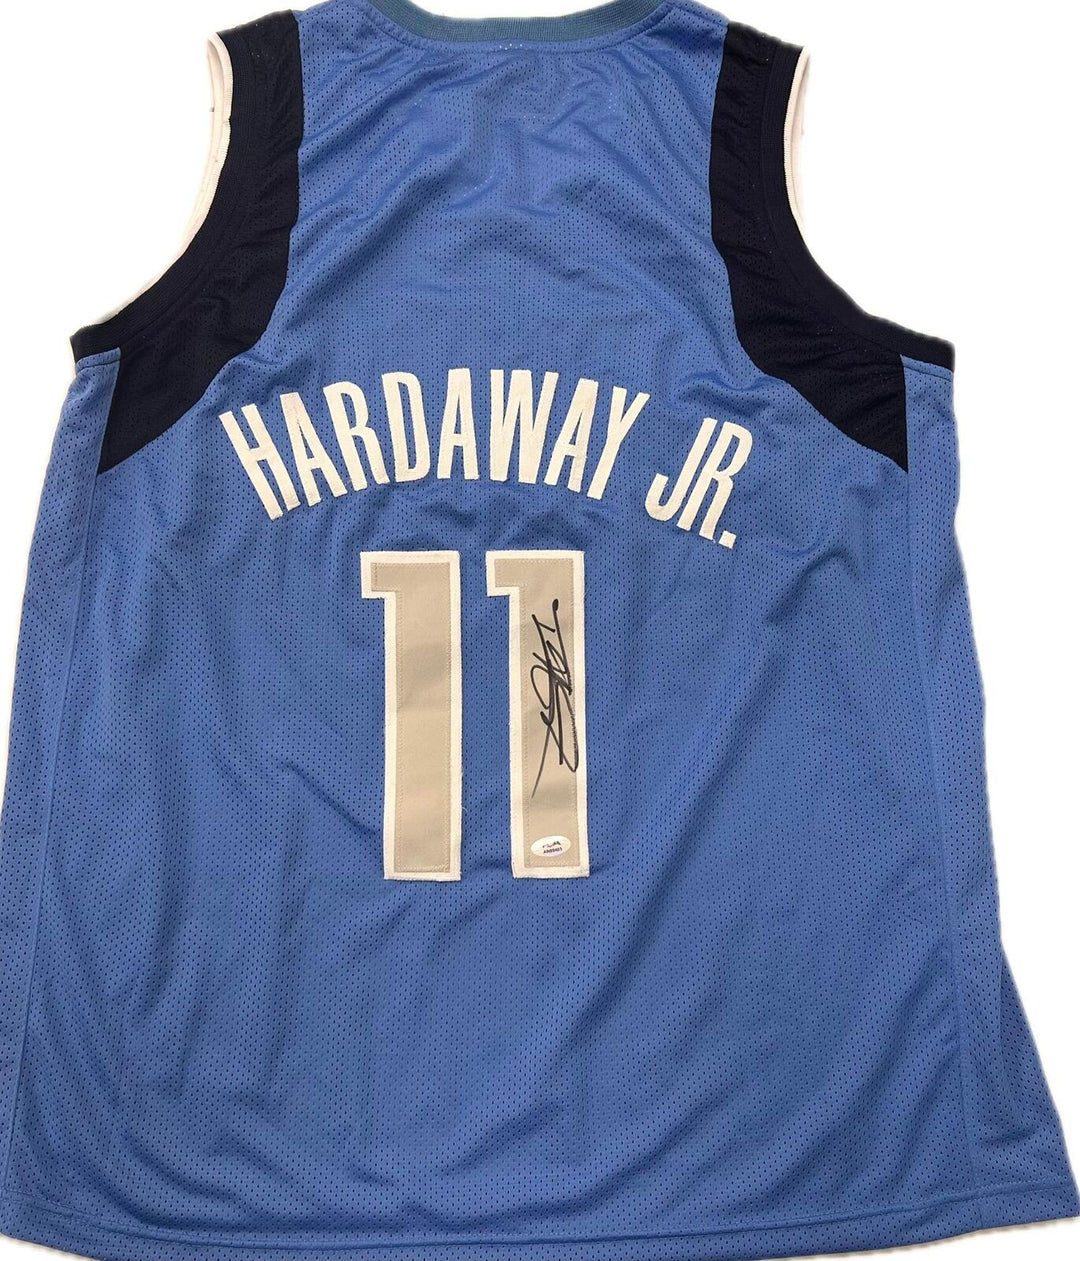 Tim Hardaway Jr. signed jersey PSA/DNA Dallas Mavericks Autographed Image 1